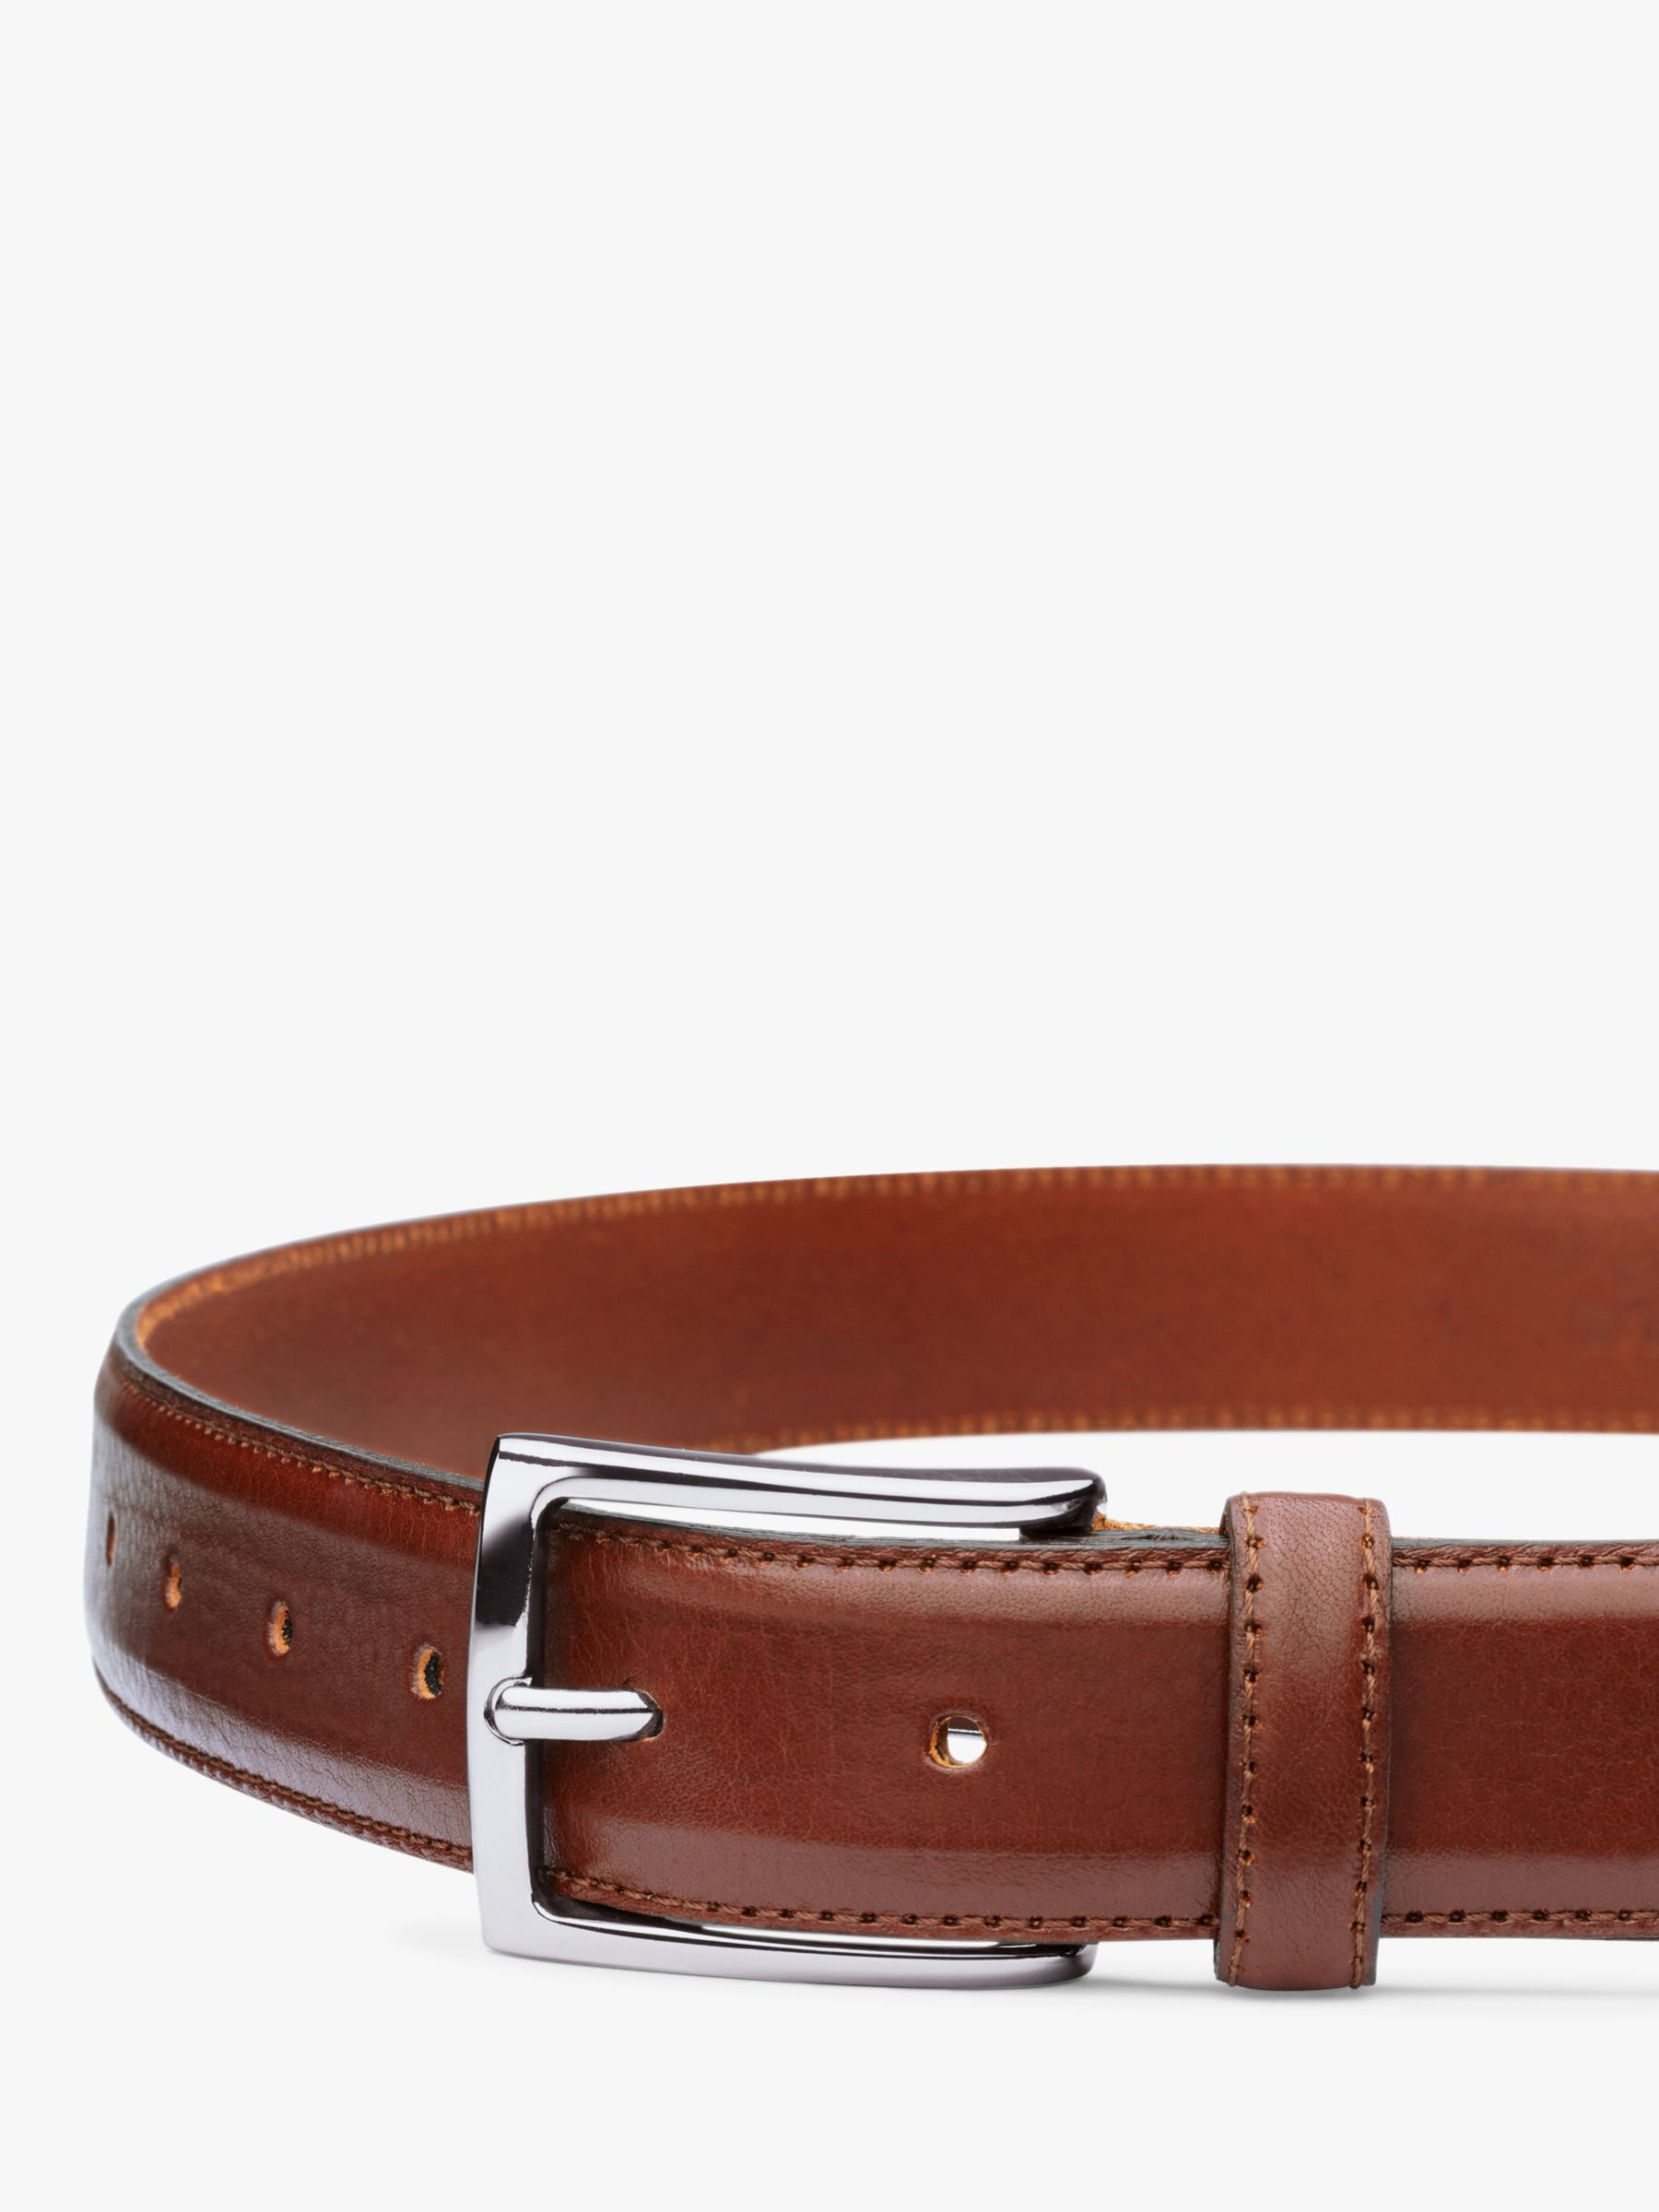 Charles Tyrwhitt Leather Belt, Dark Tan at John Lewis & Partners